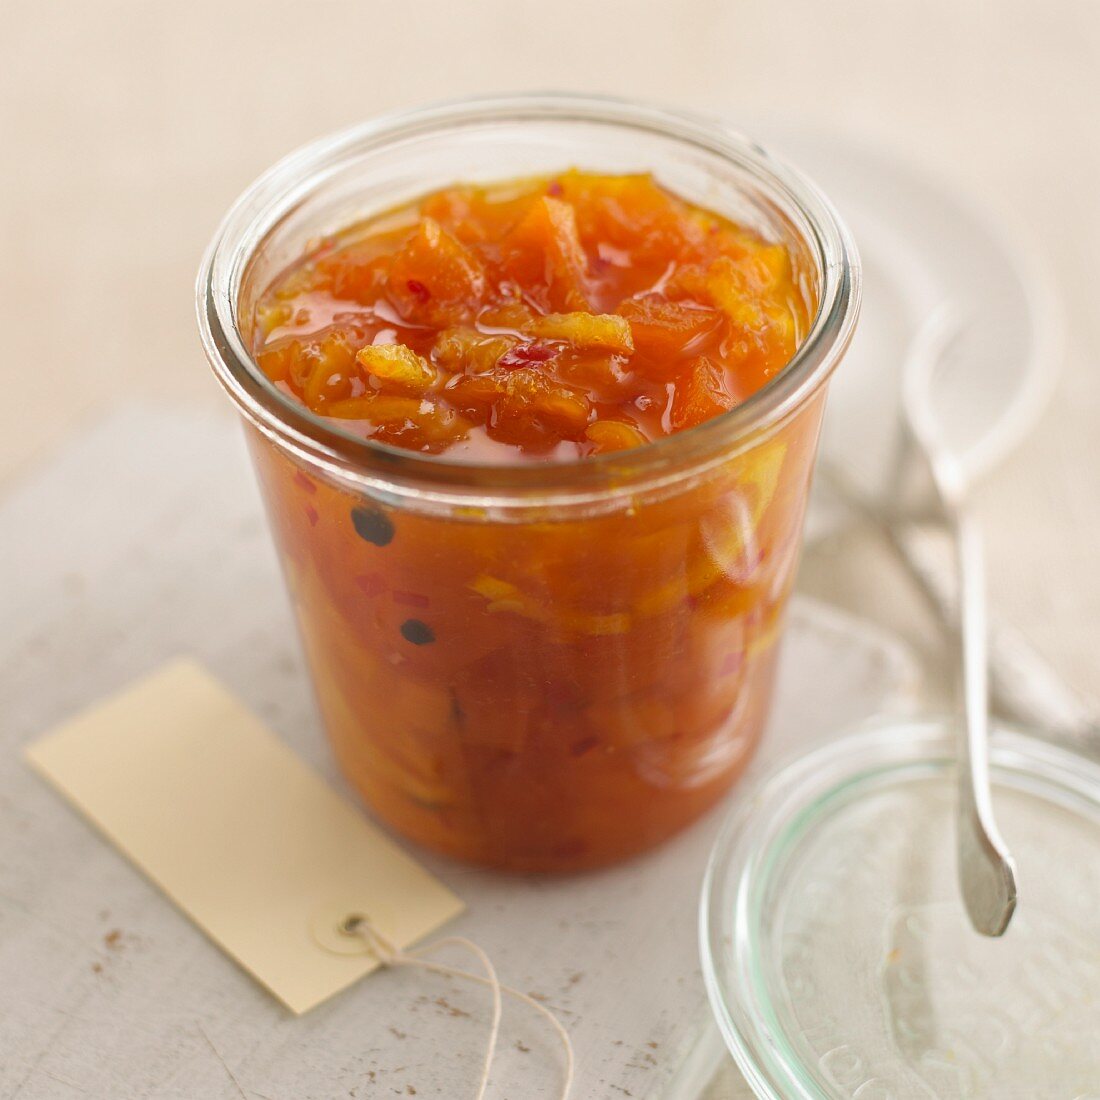 Kürbis-Chili-Marmelade im Einmachglas